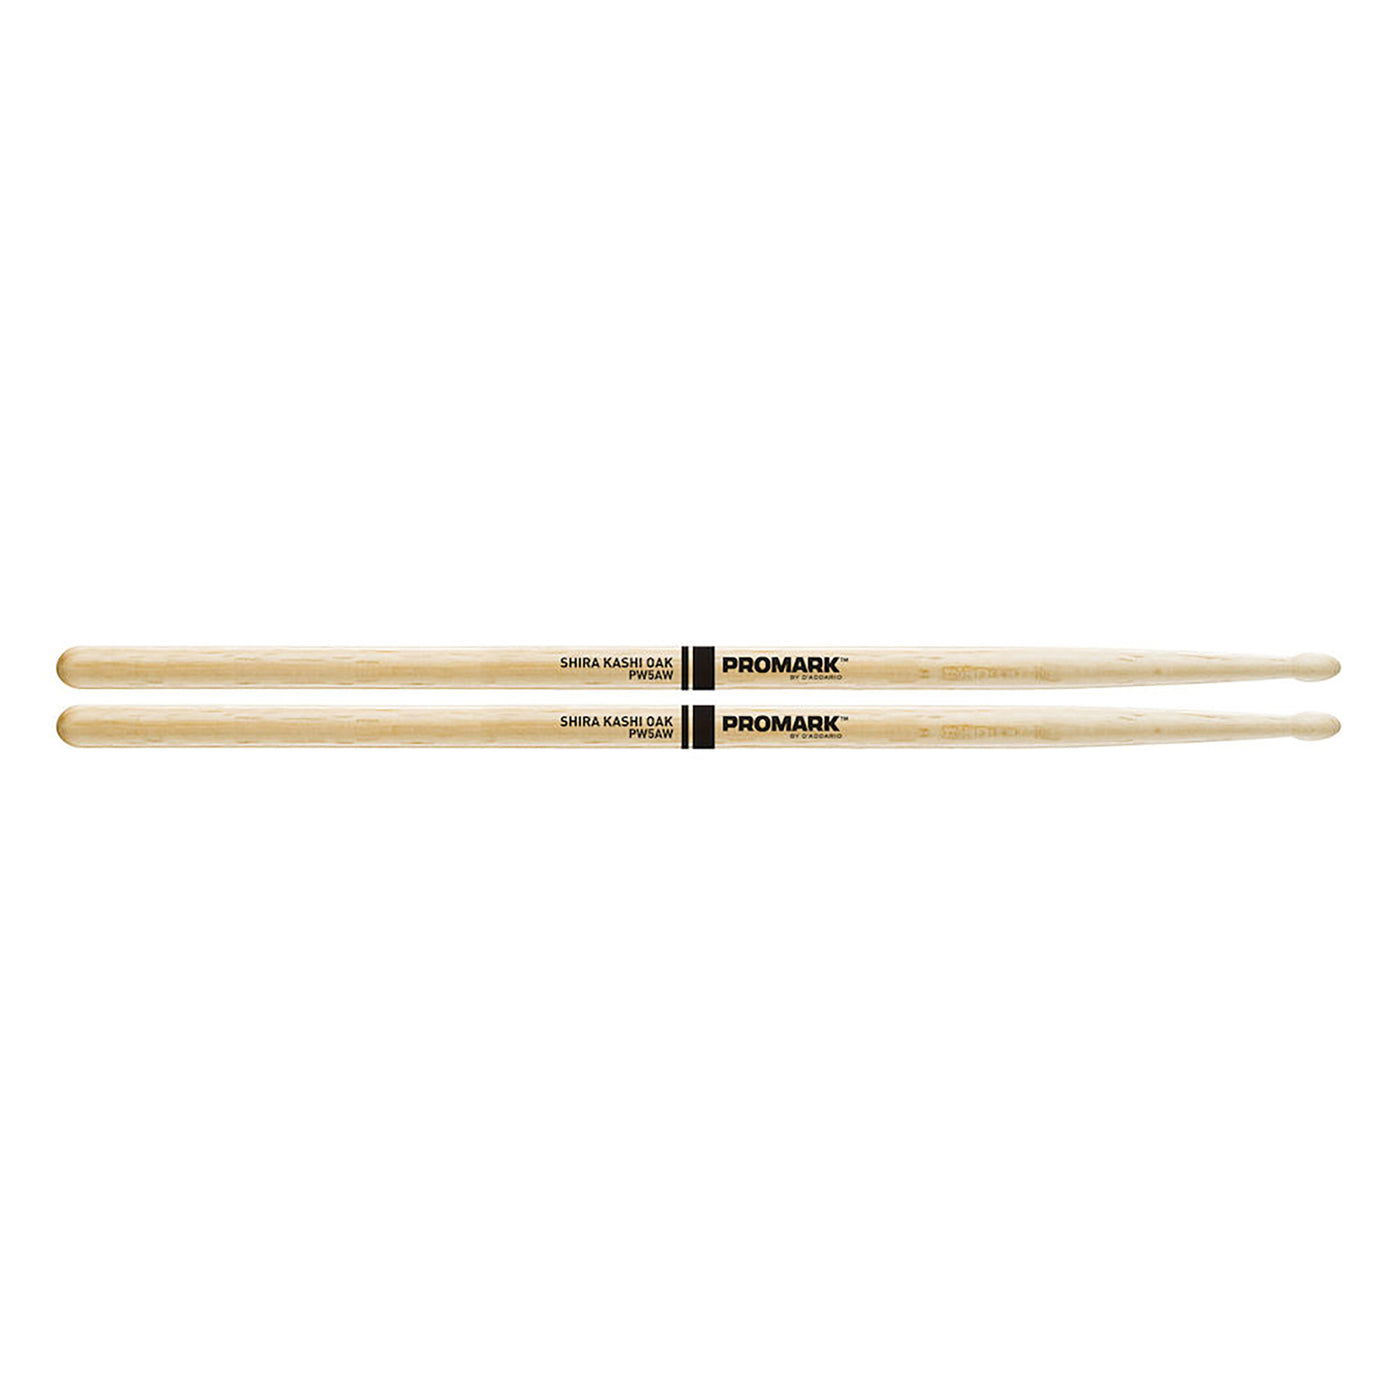 Promark Shira Kashi Oak 5A Wood Tip drumstick